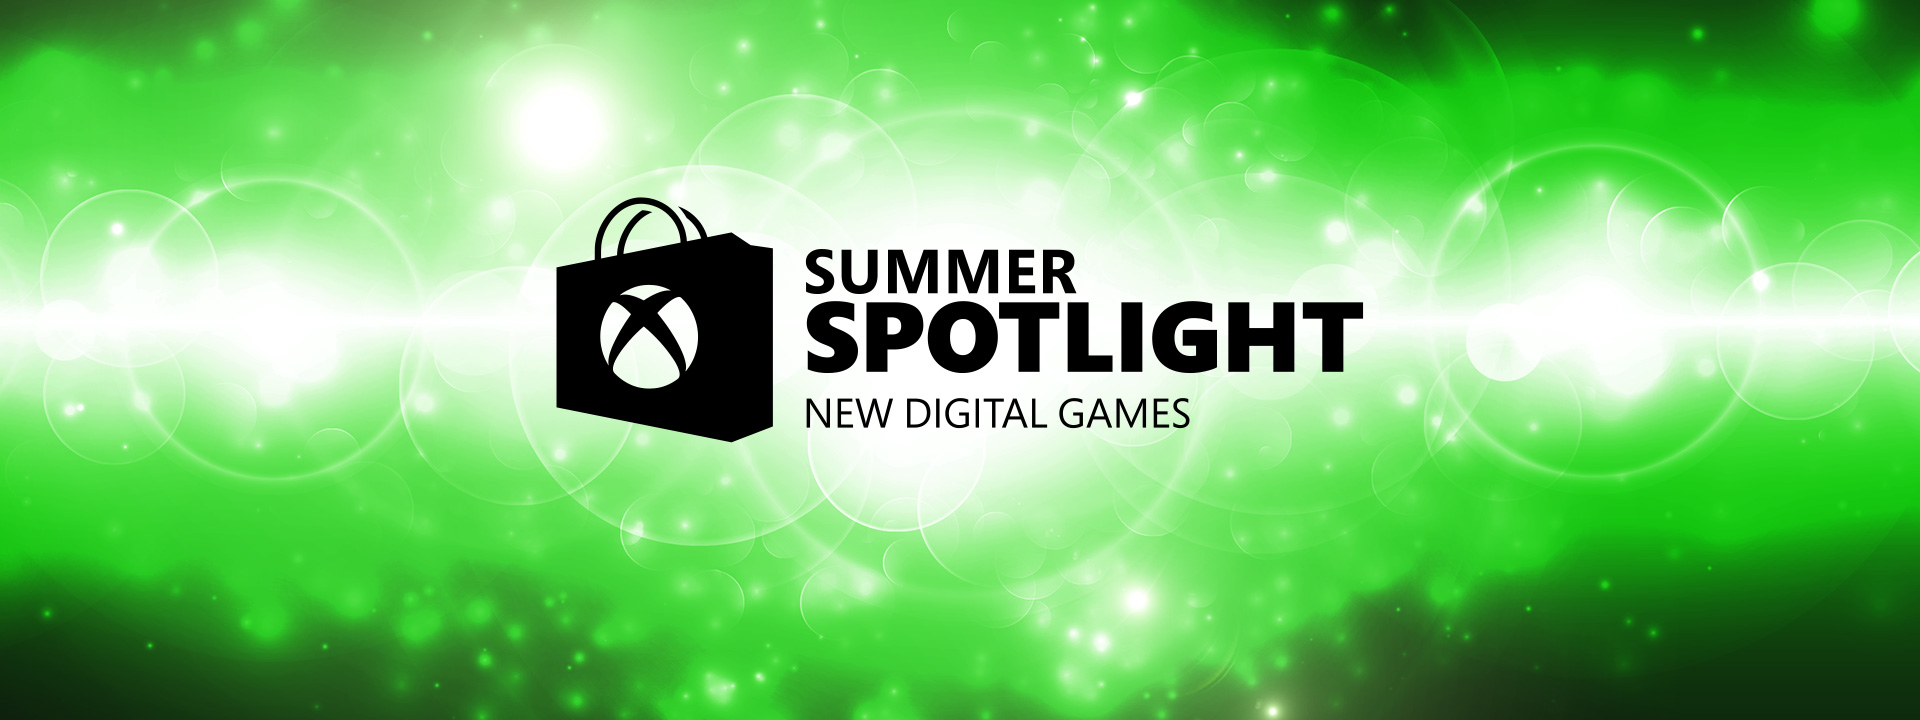 Summer Spotlight Xbox One